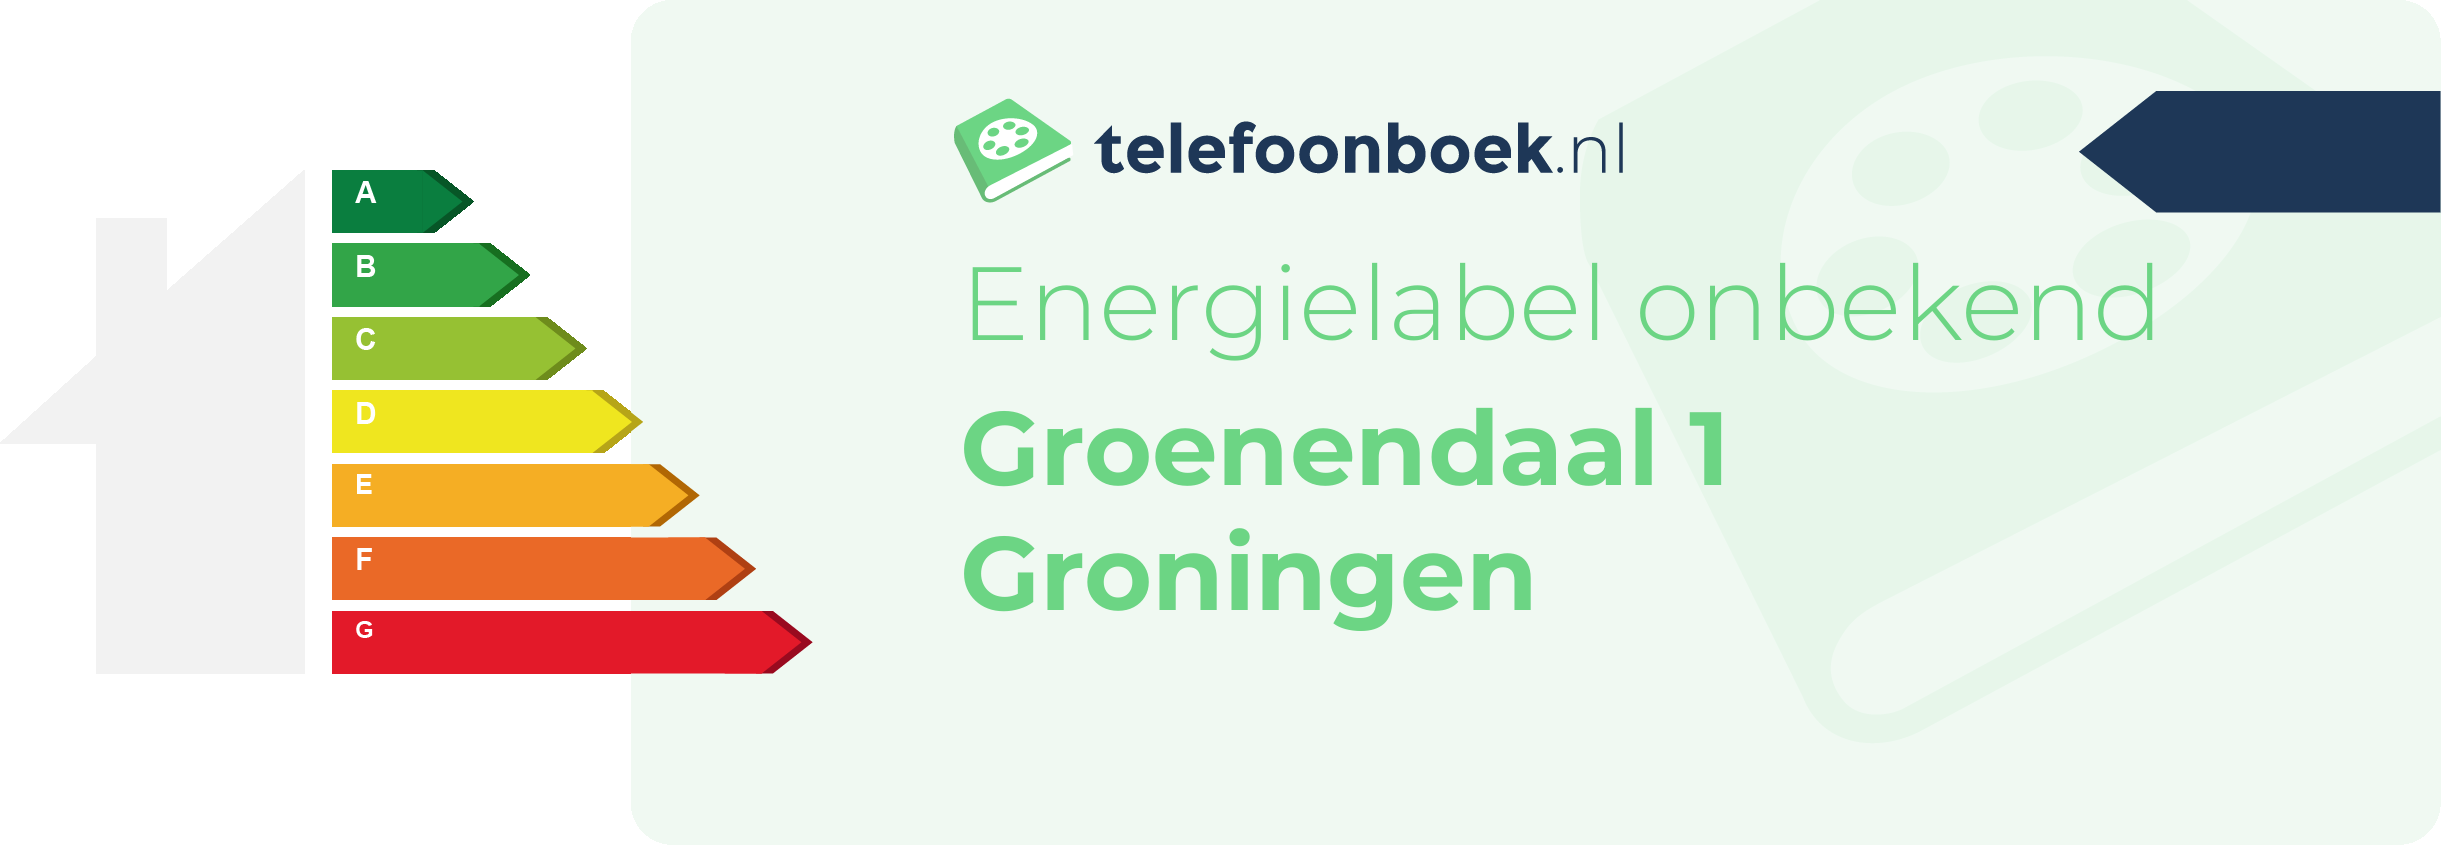 Energielabel Groenendaal 1 Groningen